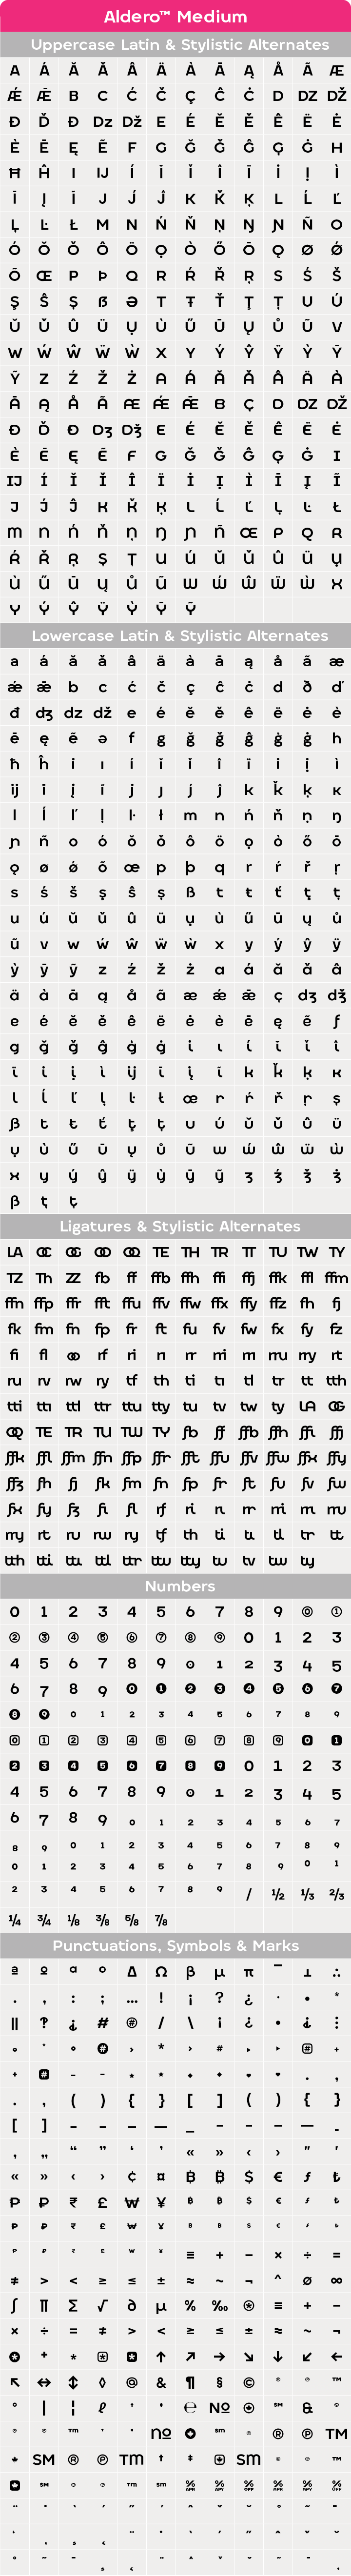 Aldero Medium Glyphs Table5.png